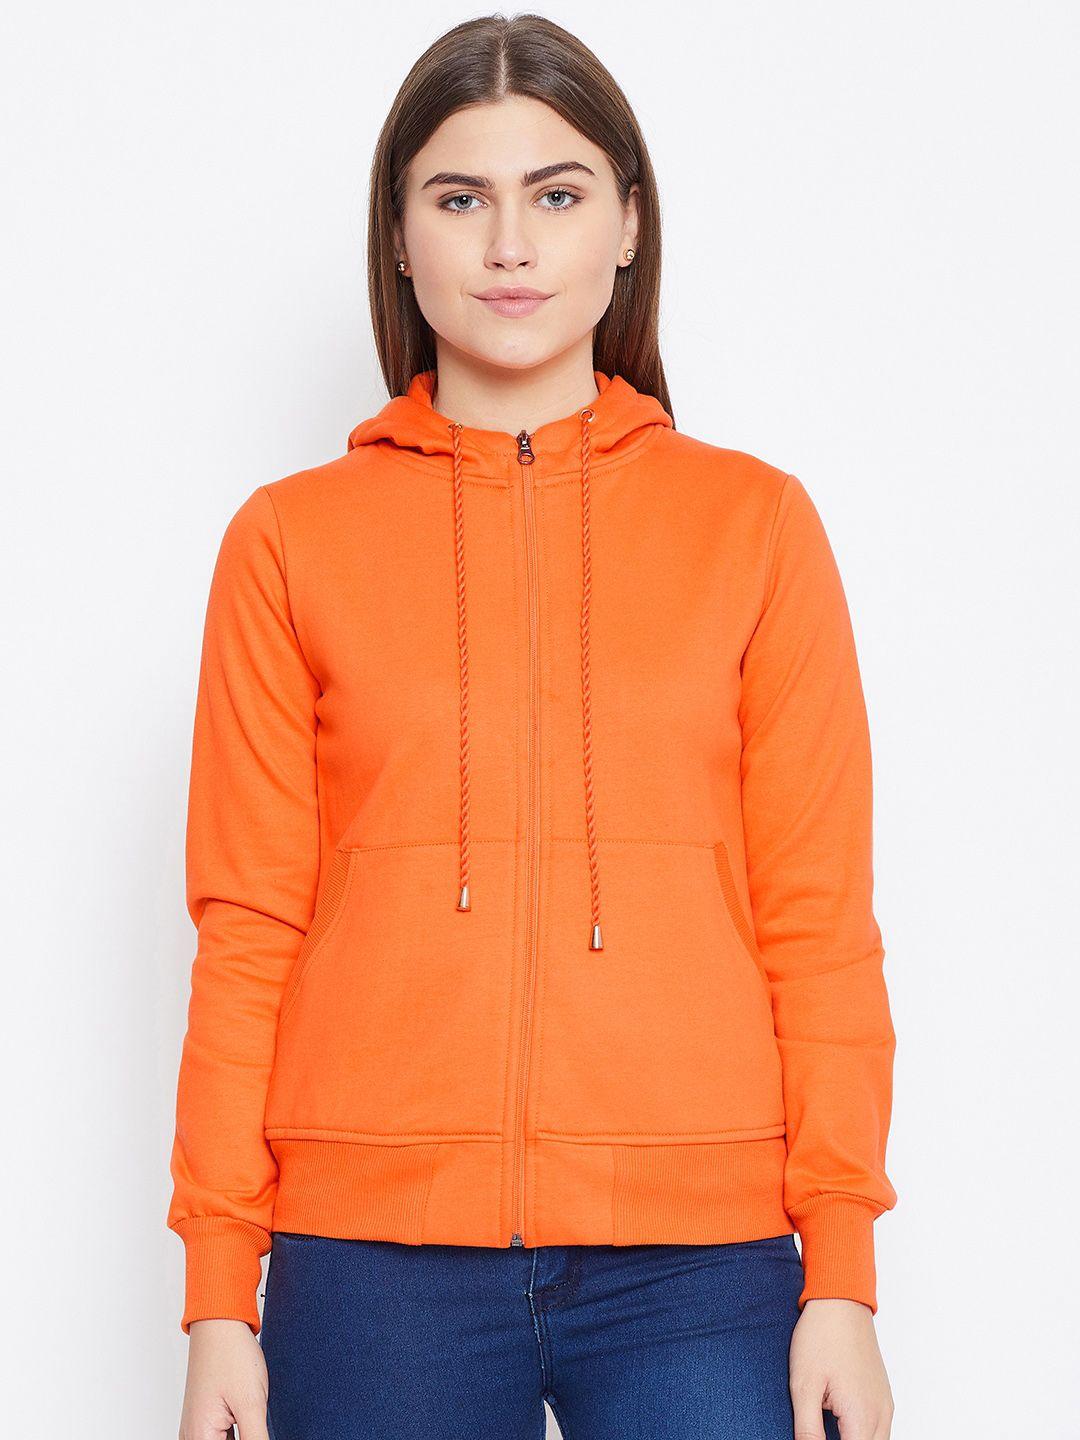 alsace lorraine paris women orange solid hooded sweatshirt